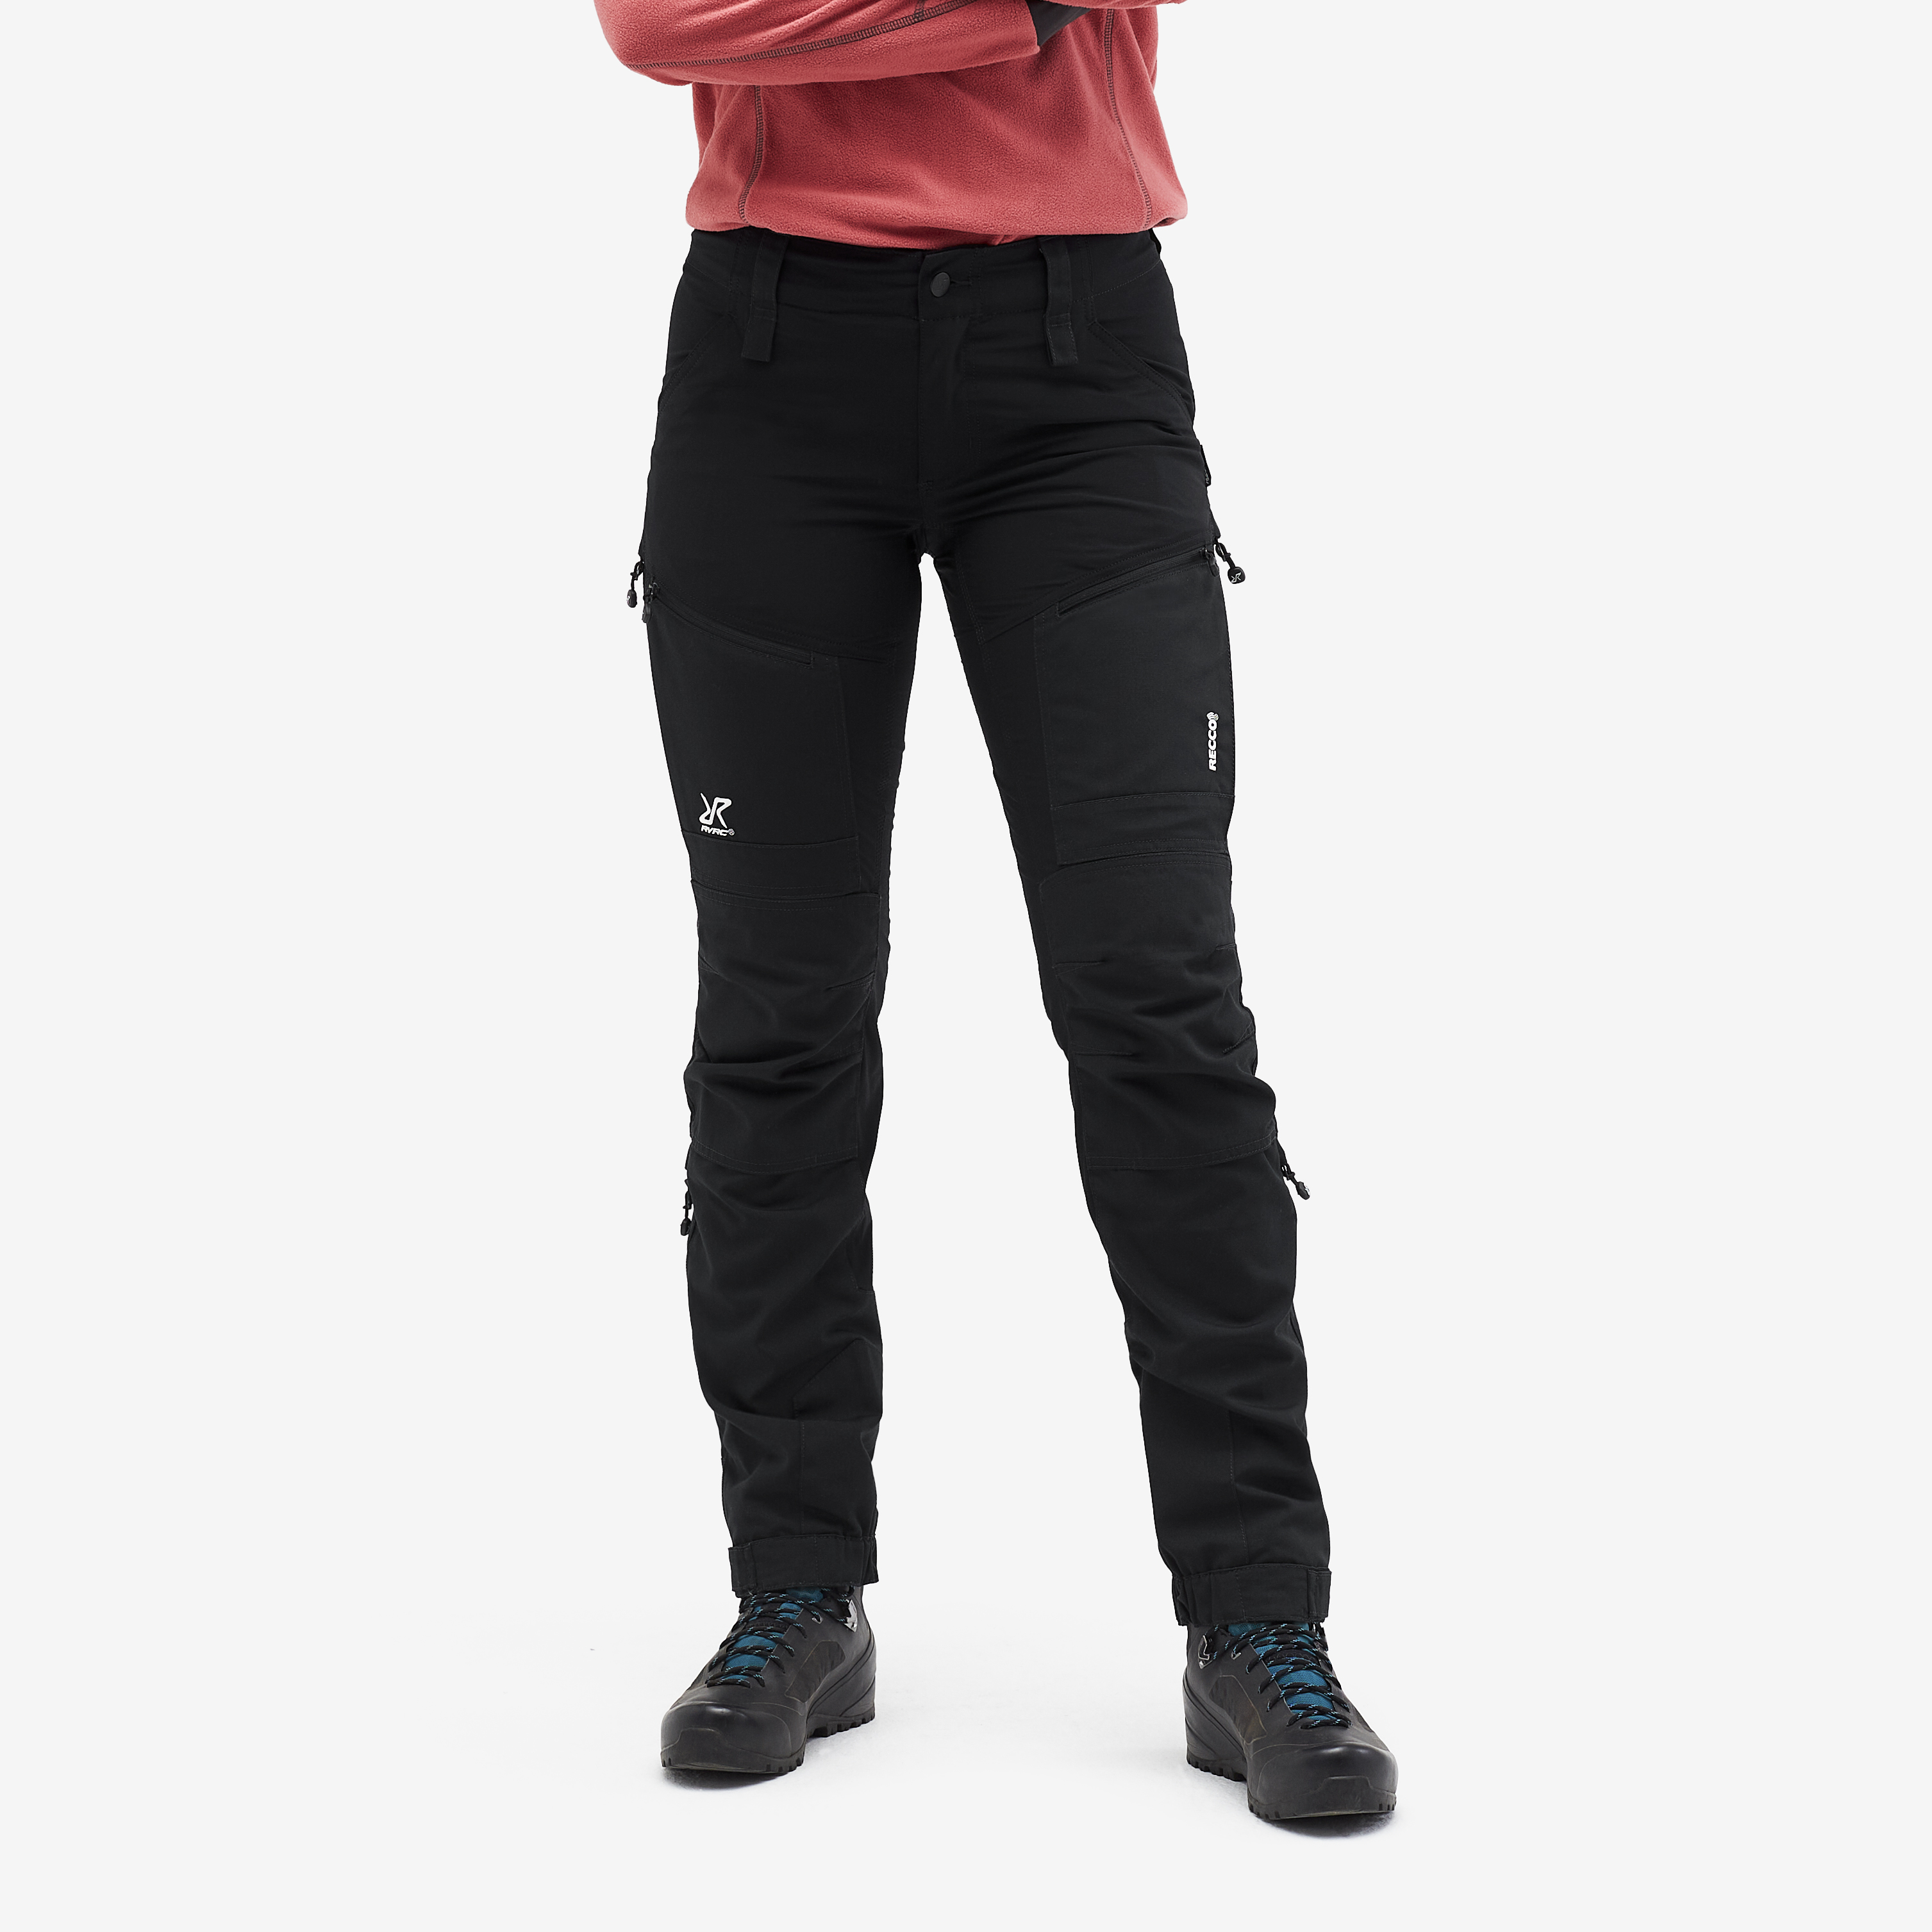 RVRC GP Pro Rescue Pants Naiset Black Edition 2.0 Koko:S – Ulkoiluhousut Vaellushousut & Retkeilyhousut